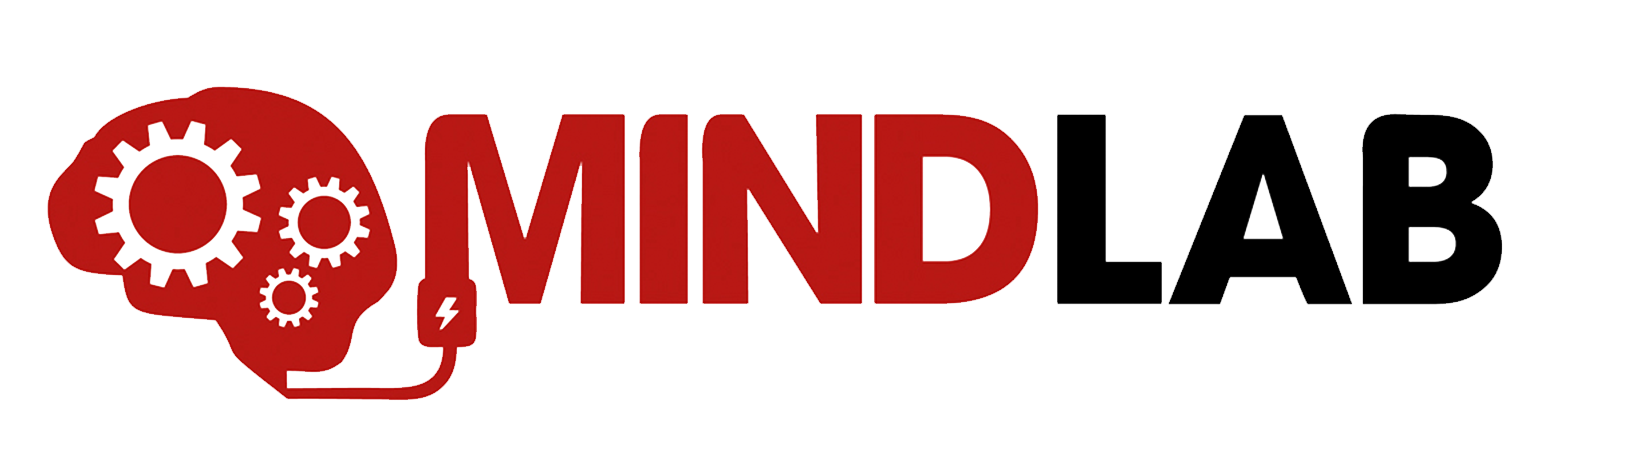 Mindlab Logo